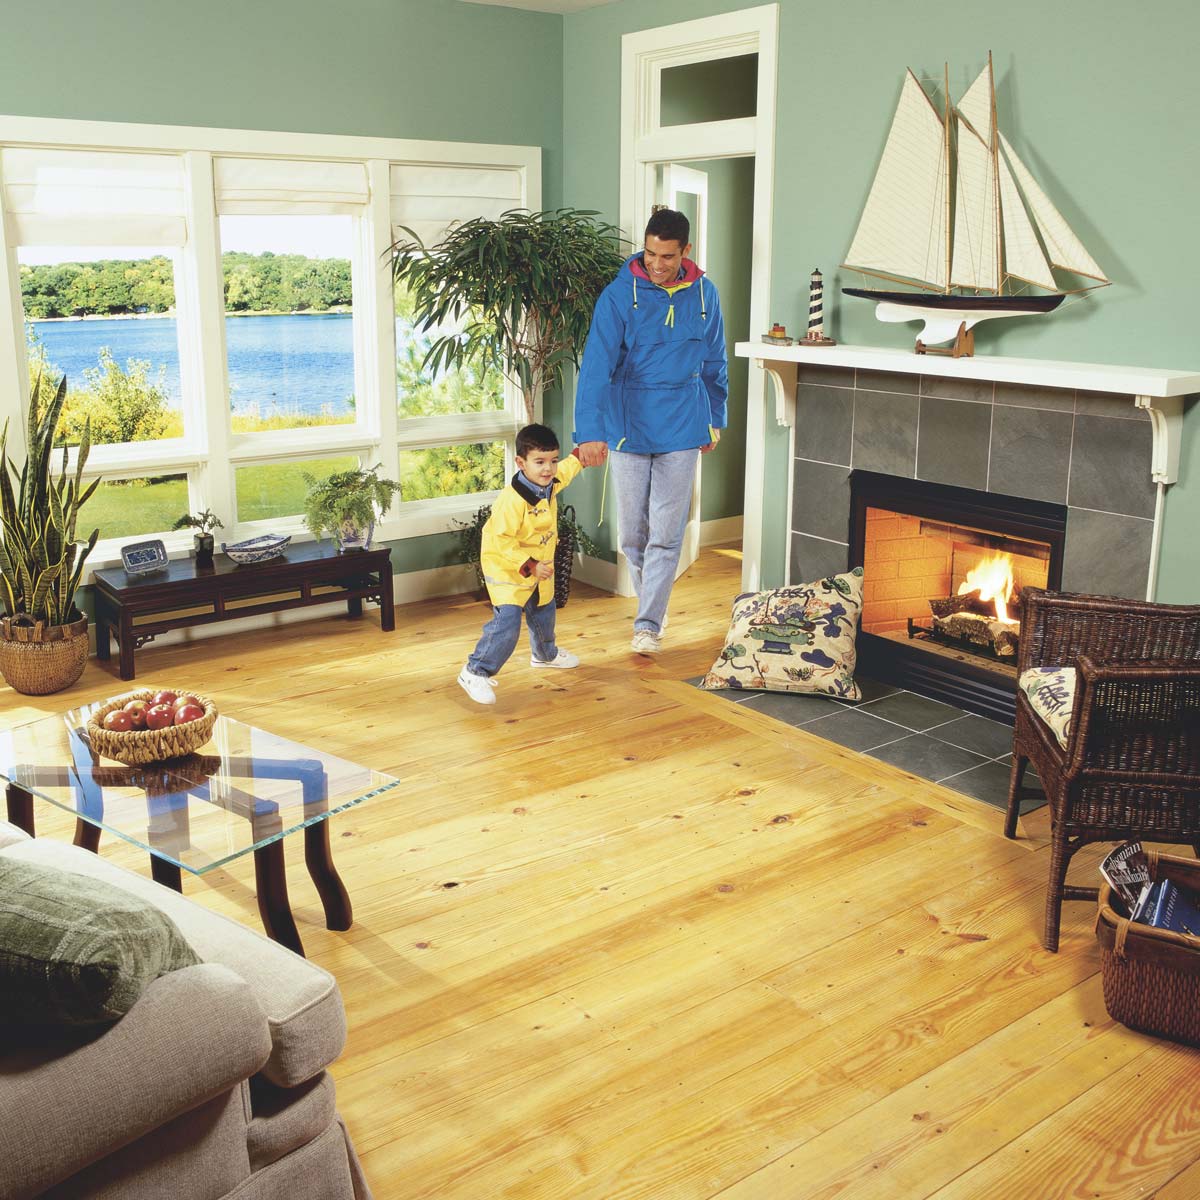 Diy Water Vapor Fireplace Best Of How to Install Pine Floors